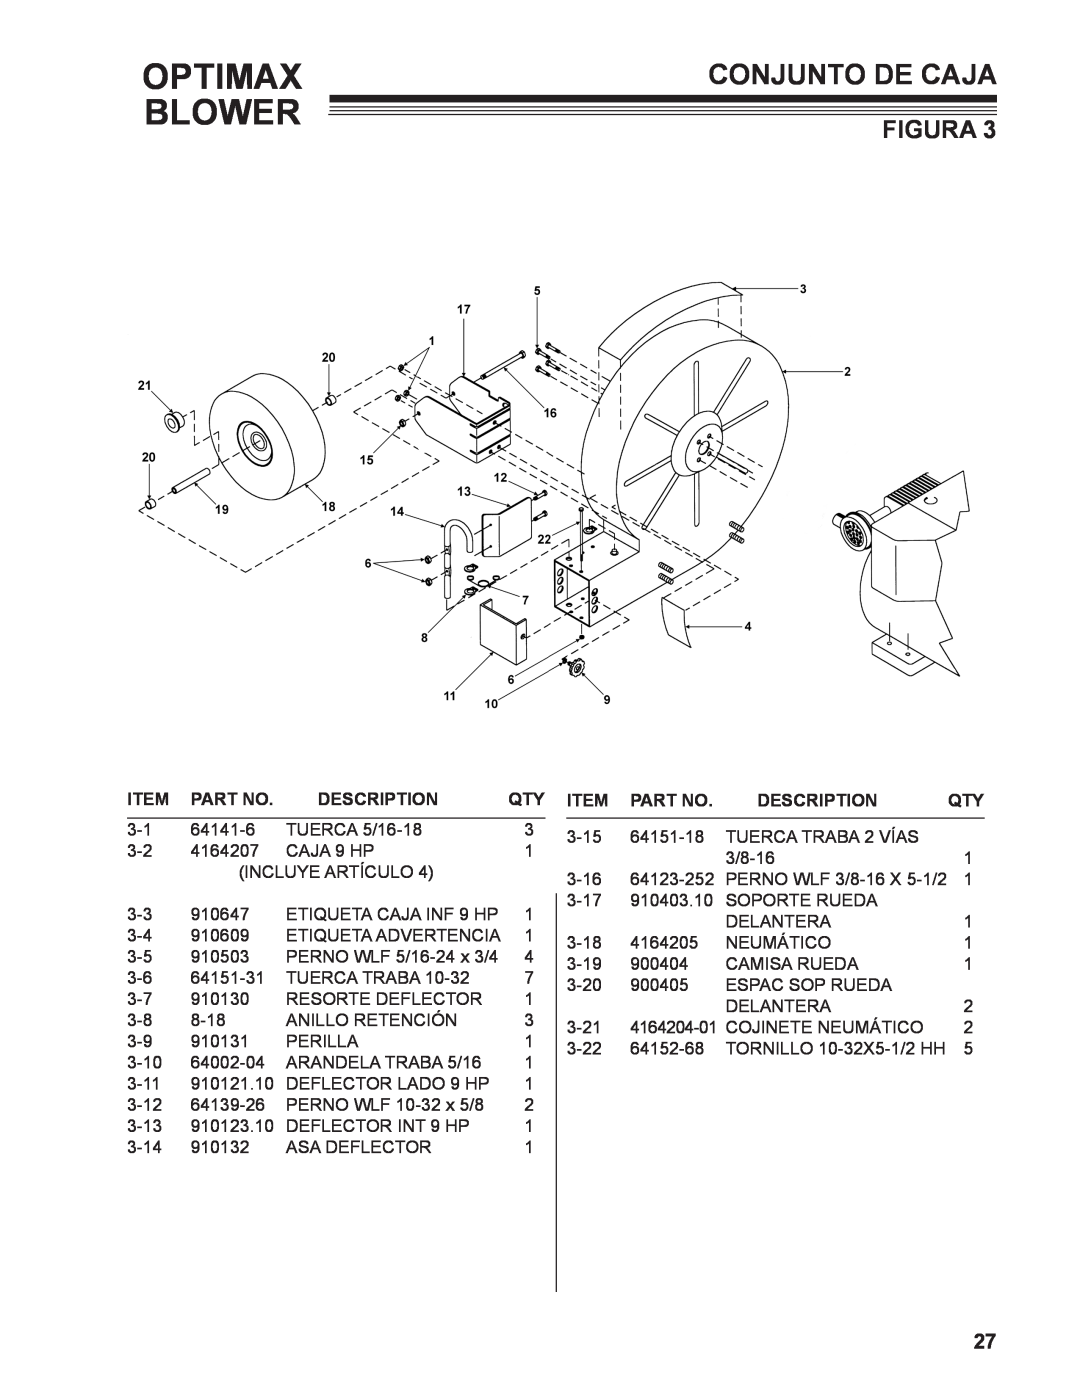 Little Wonder LB901-00-01 technical manual Conjunto De Caja, Optimax Blower, Figura 